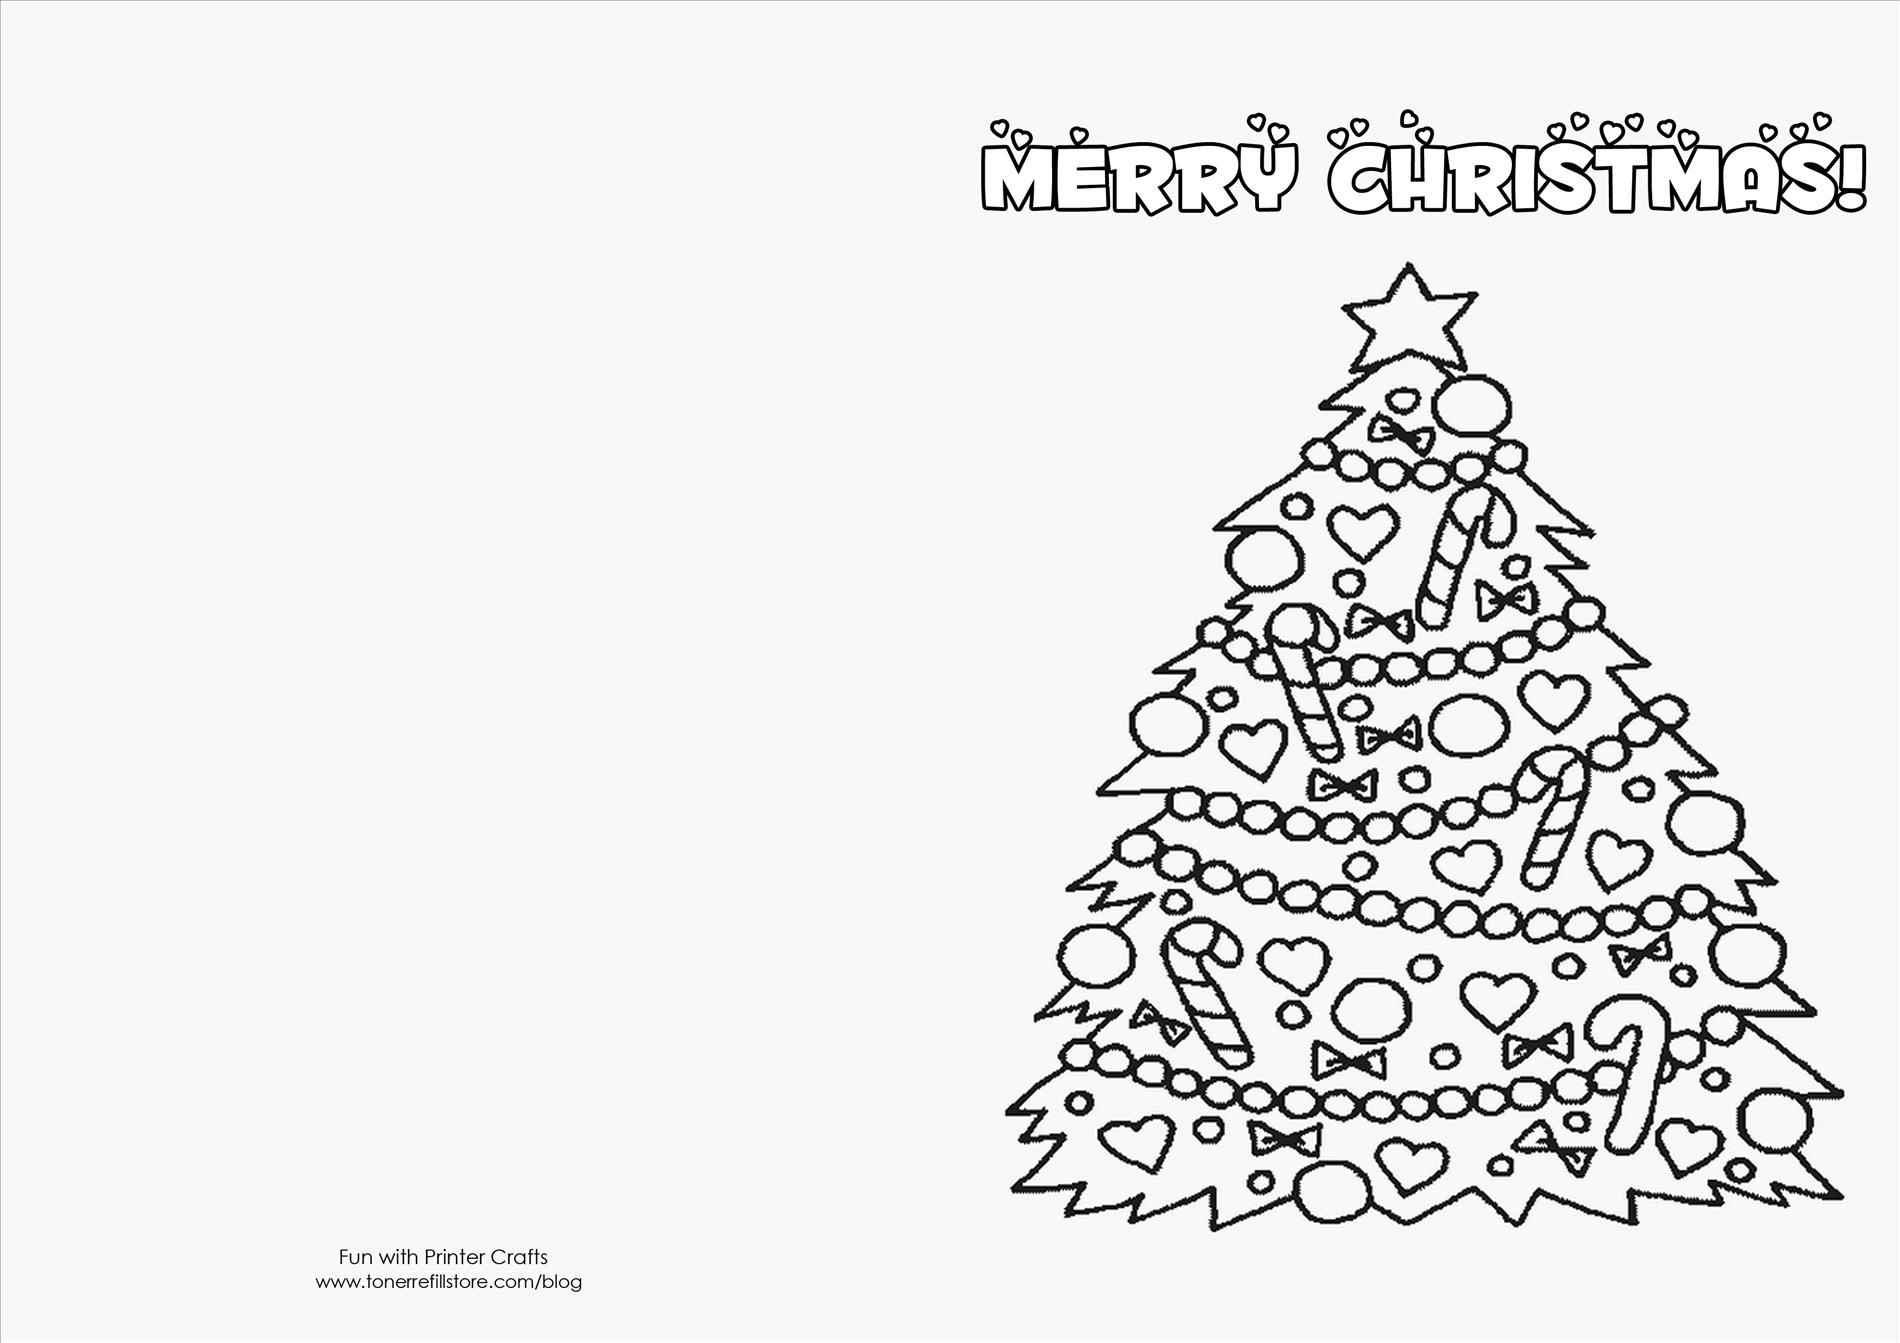 Printable Christmas Cards Templates | Theveliger For Printable Holiday Card Templates